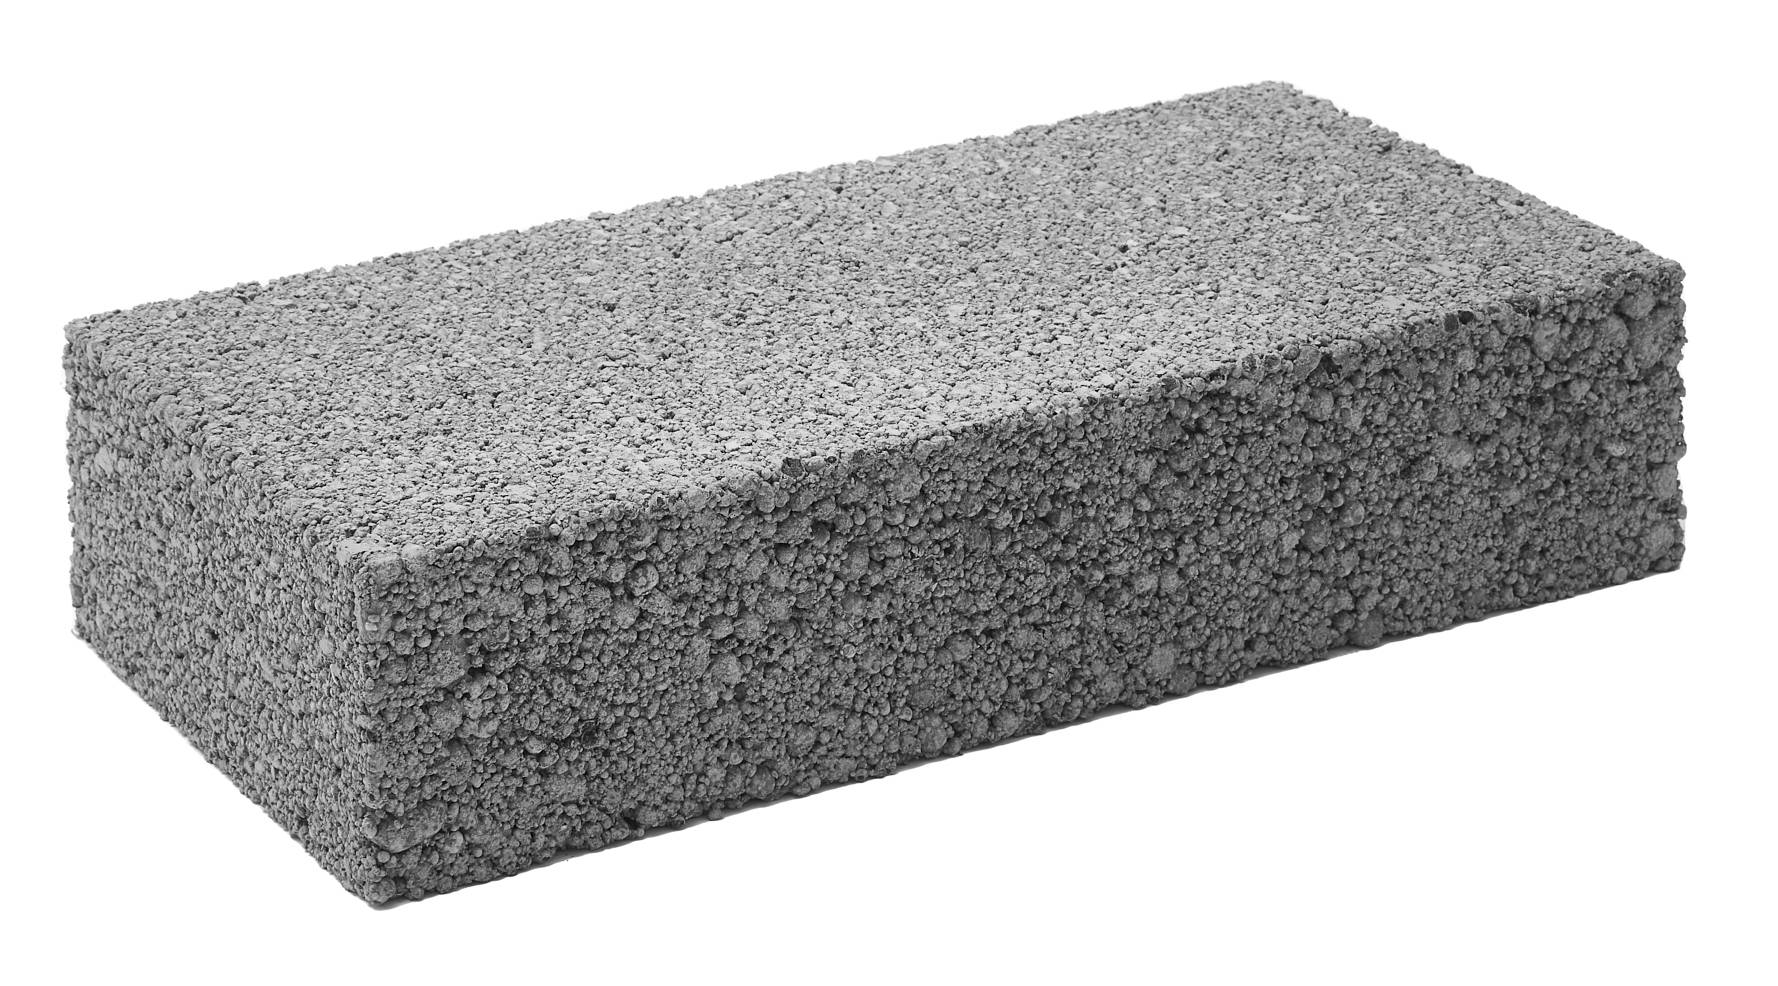 Fibo 850 100 mm 3.6 N Concrete Block Range